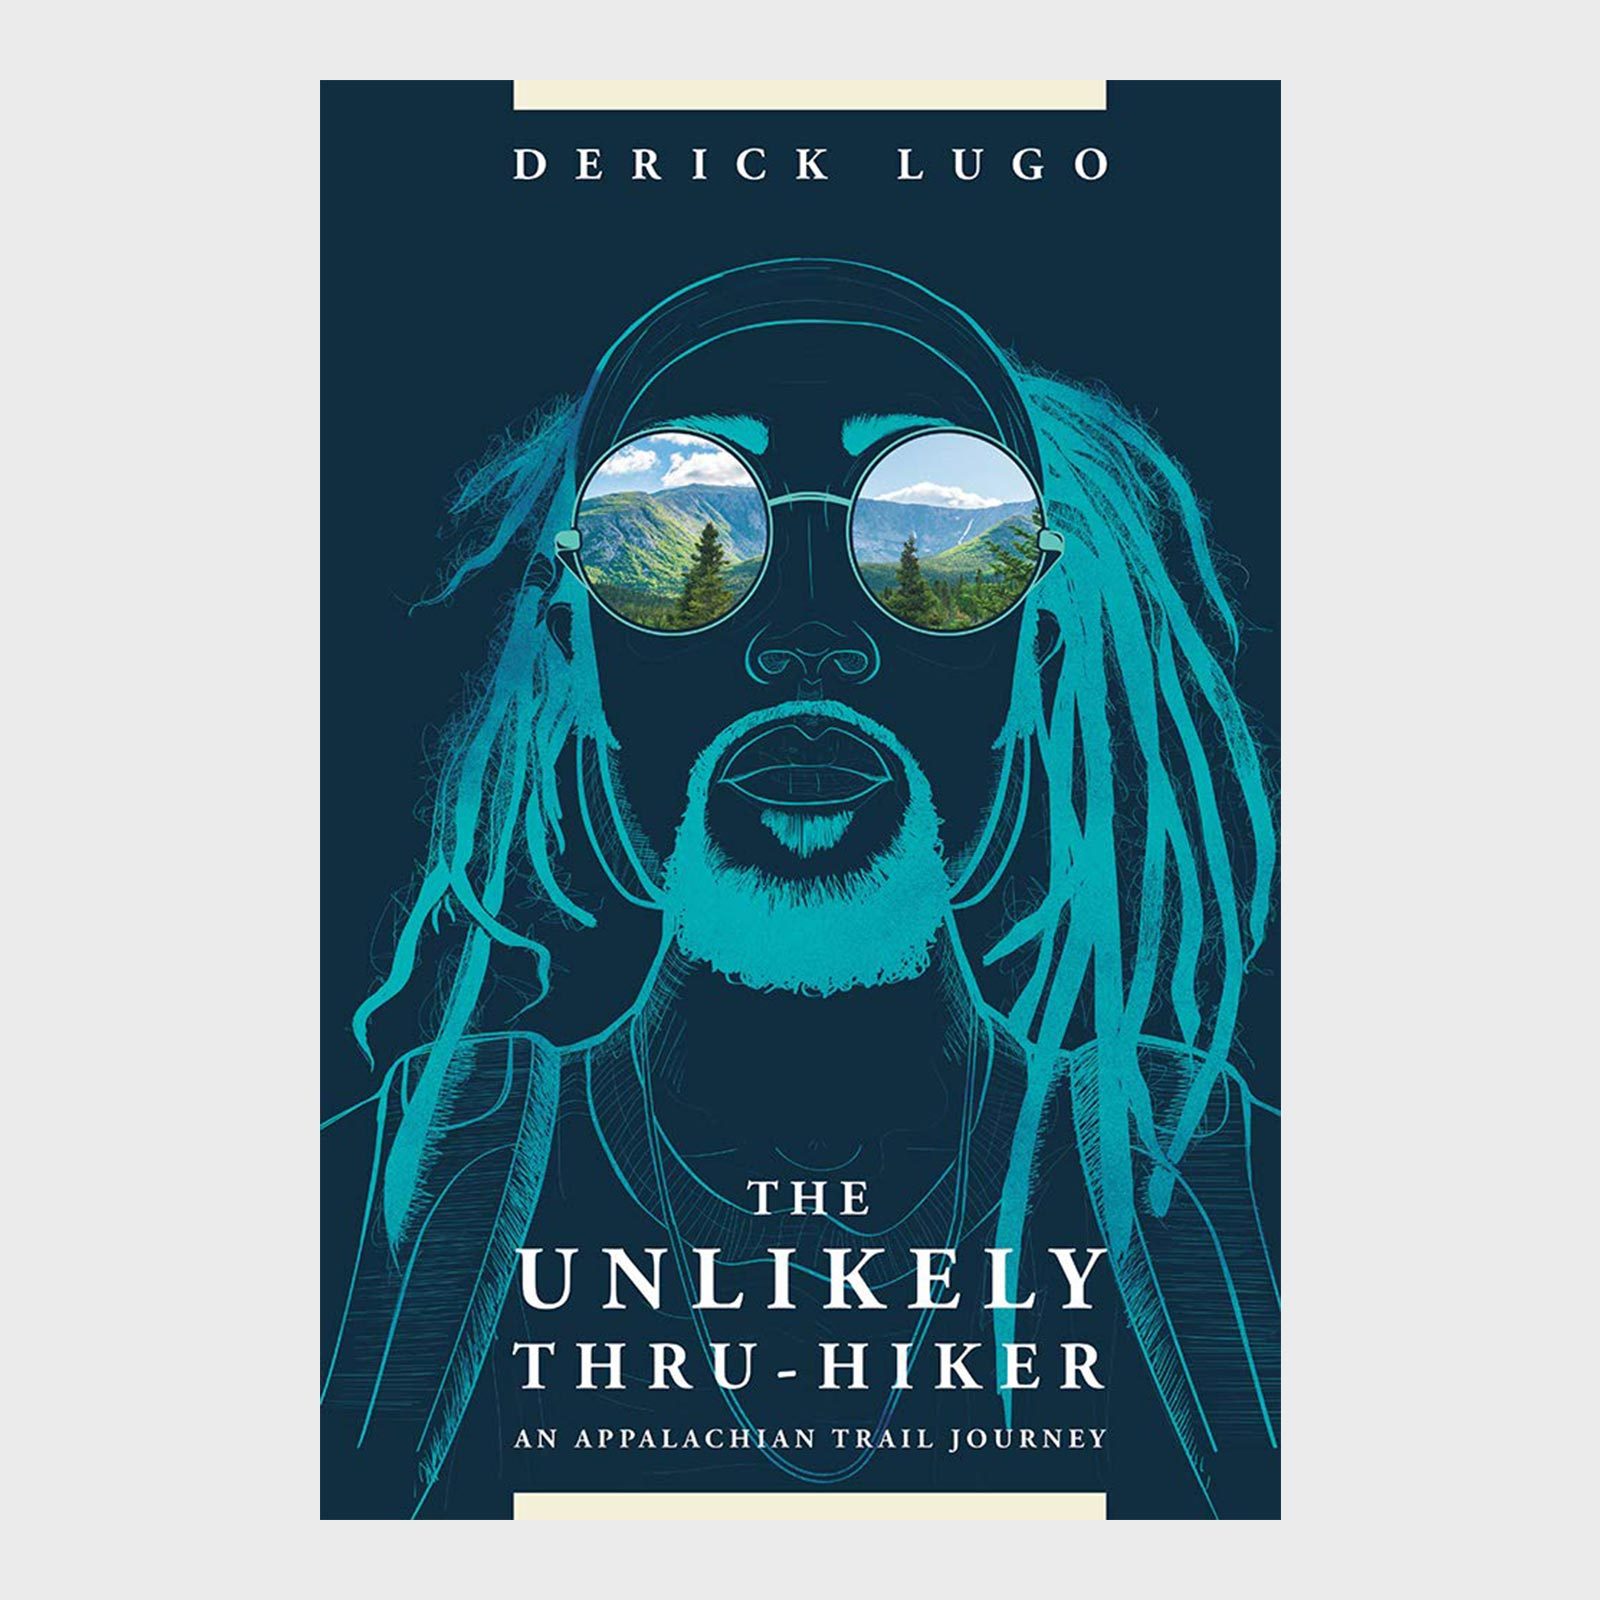 The Unlikely Thru-Hiker by Derick Lugo